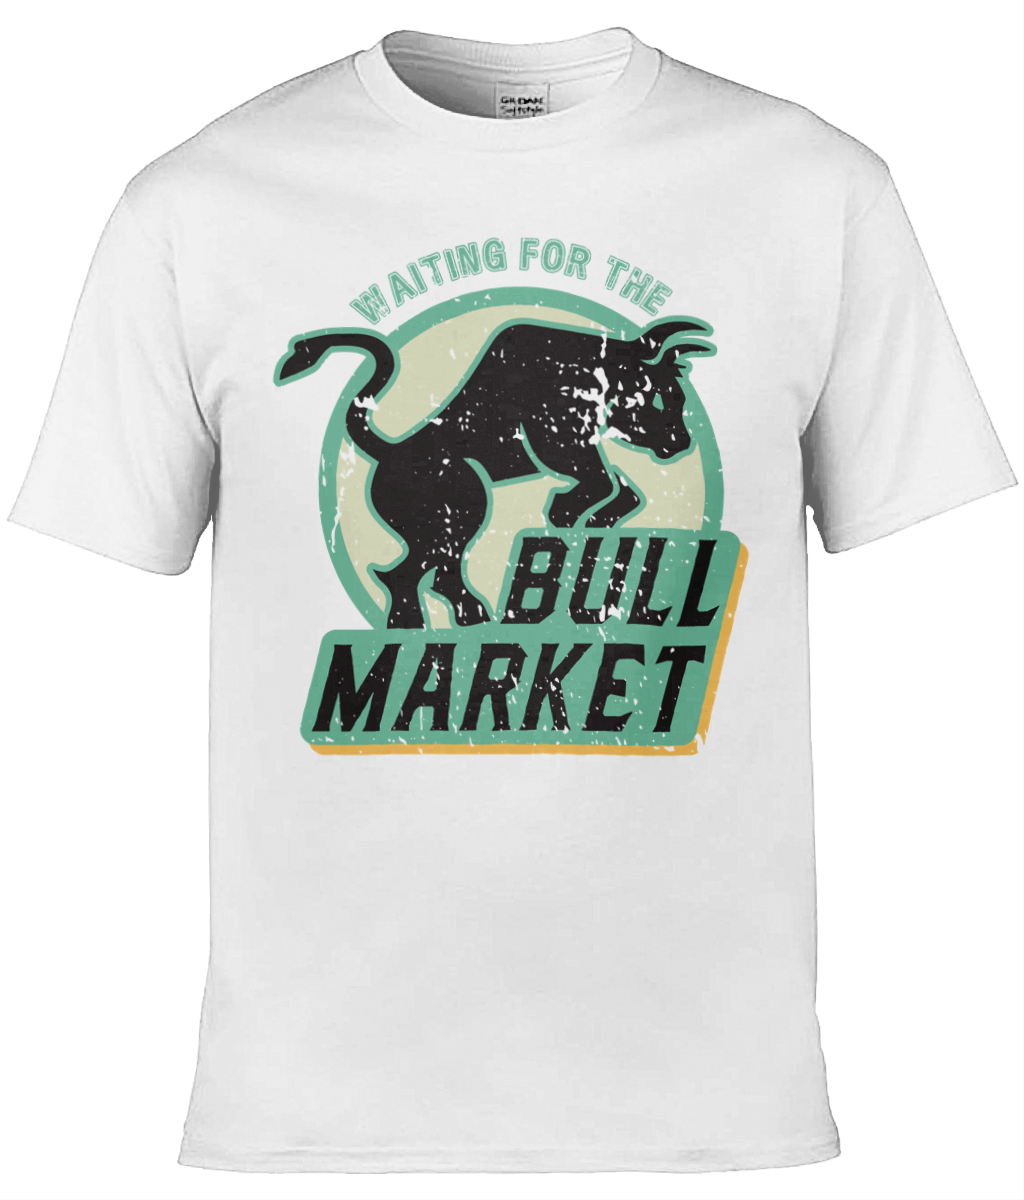 Waiting For the Bull Market T-shirt, Unisex T-shirt